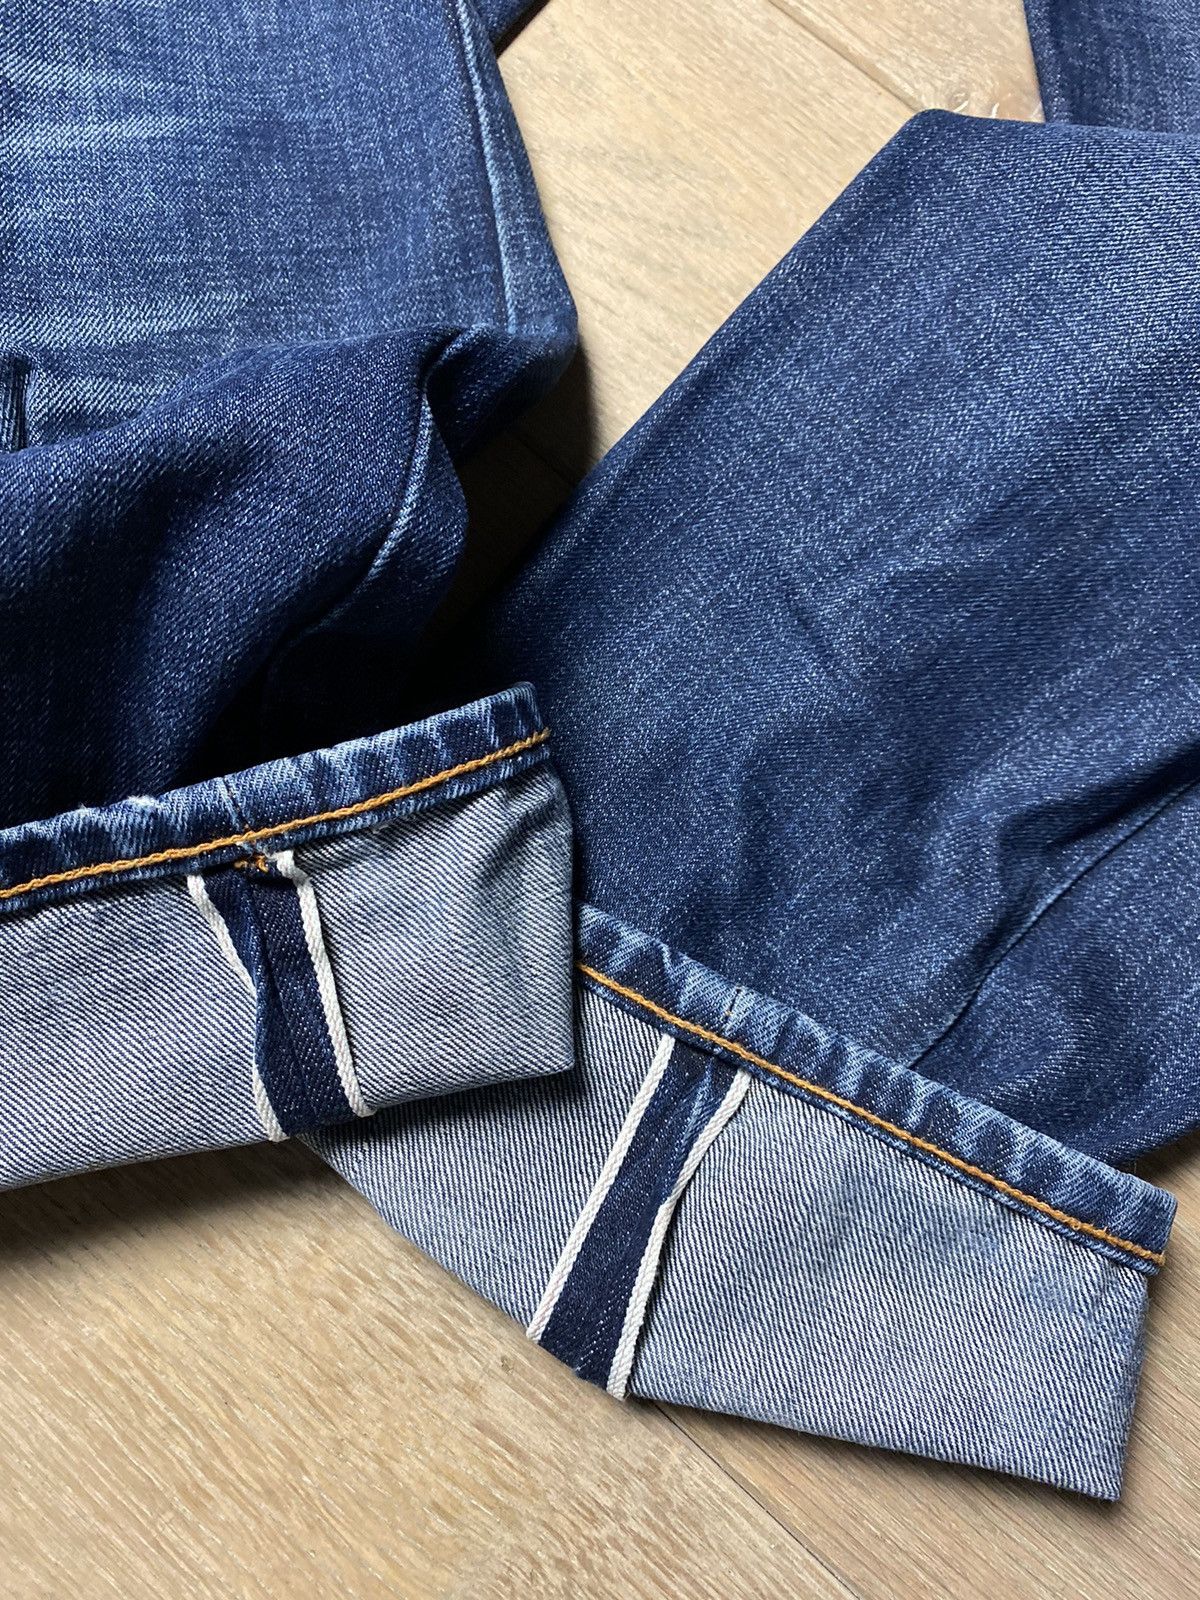 Vintage Evisu Japan vintage blue jeans denim pants big seagull logo Size US 38 / EU 54 - 7 Thumbnail